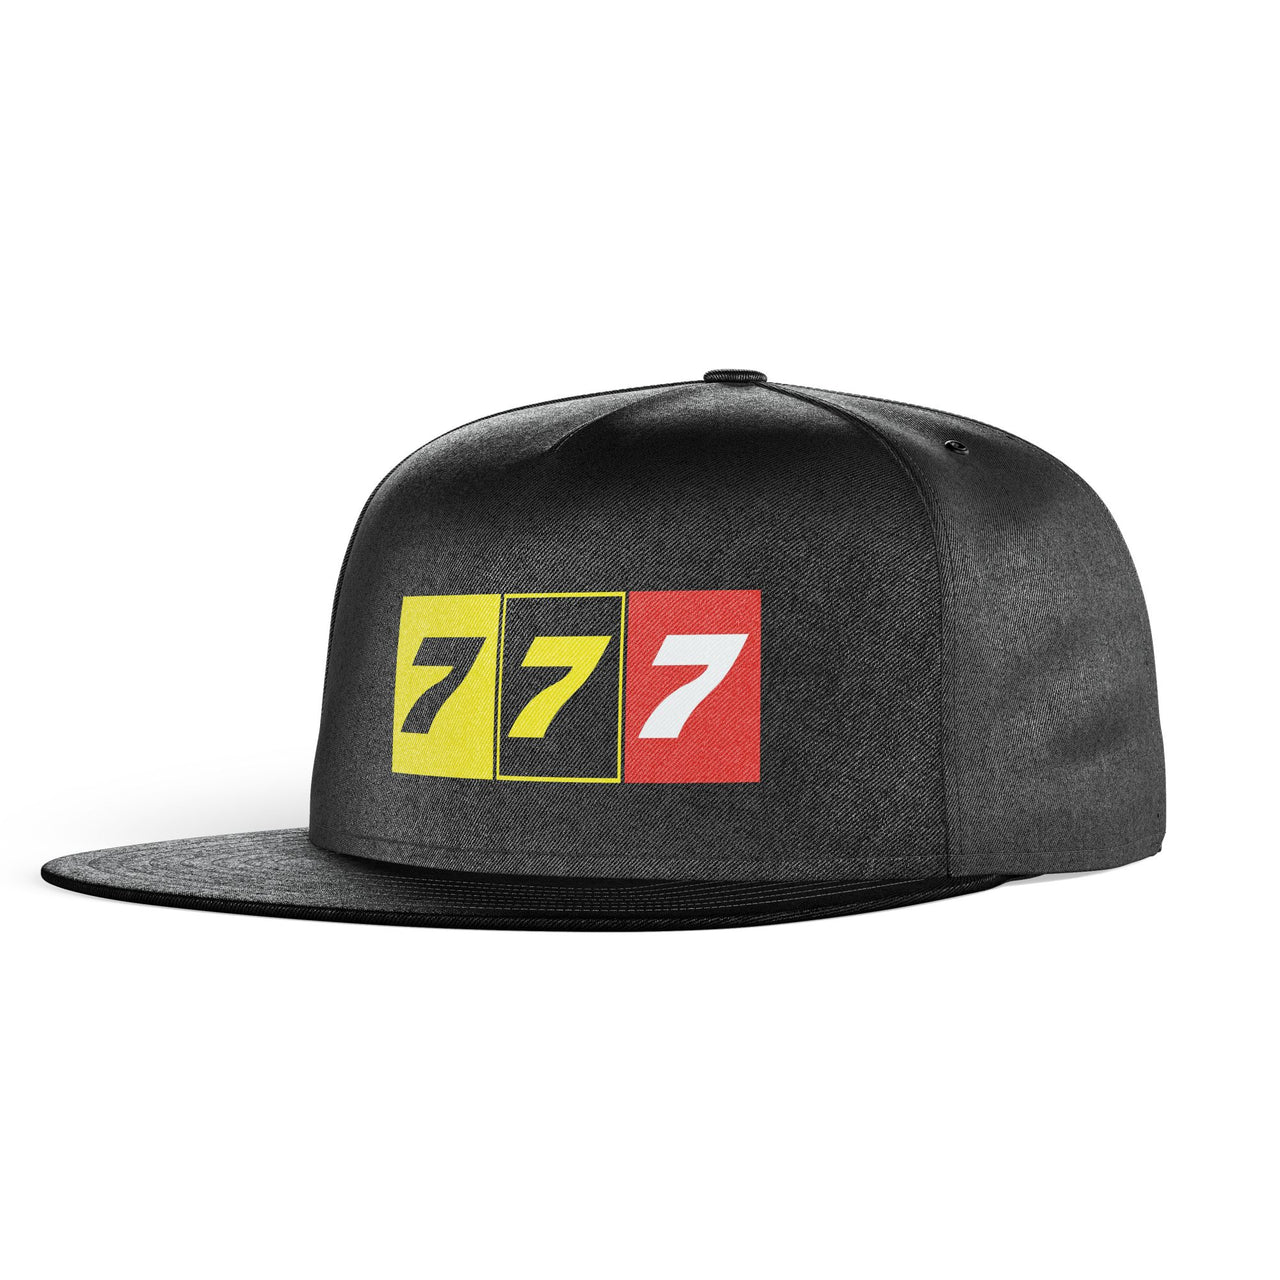 Flat Colourful 777 Designed Snapback Caps & Hats